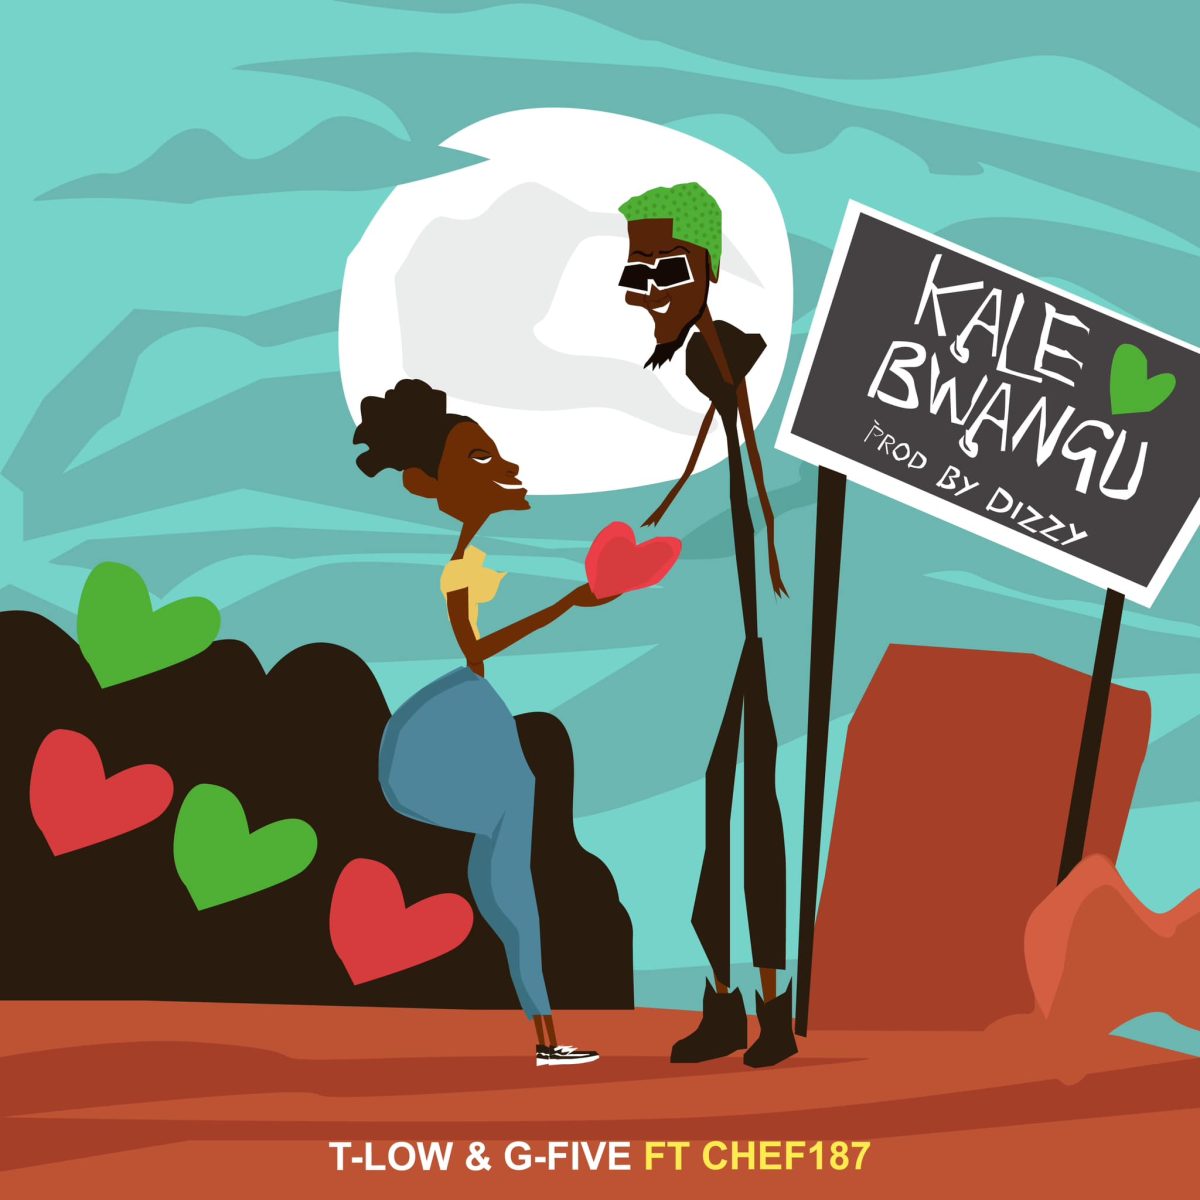 T-Low ft. G-Five & Chef187 - Kale Bwangu